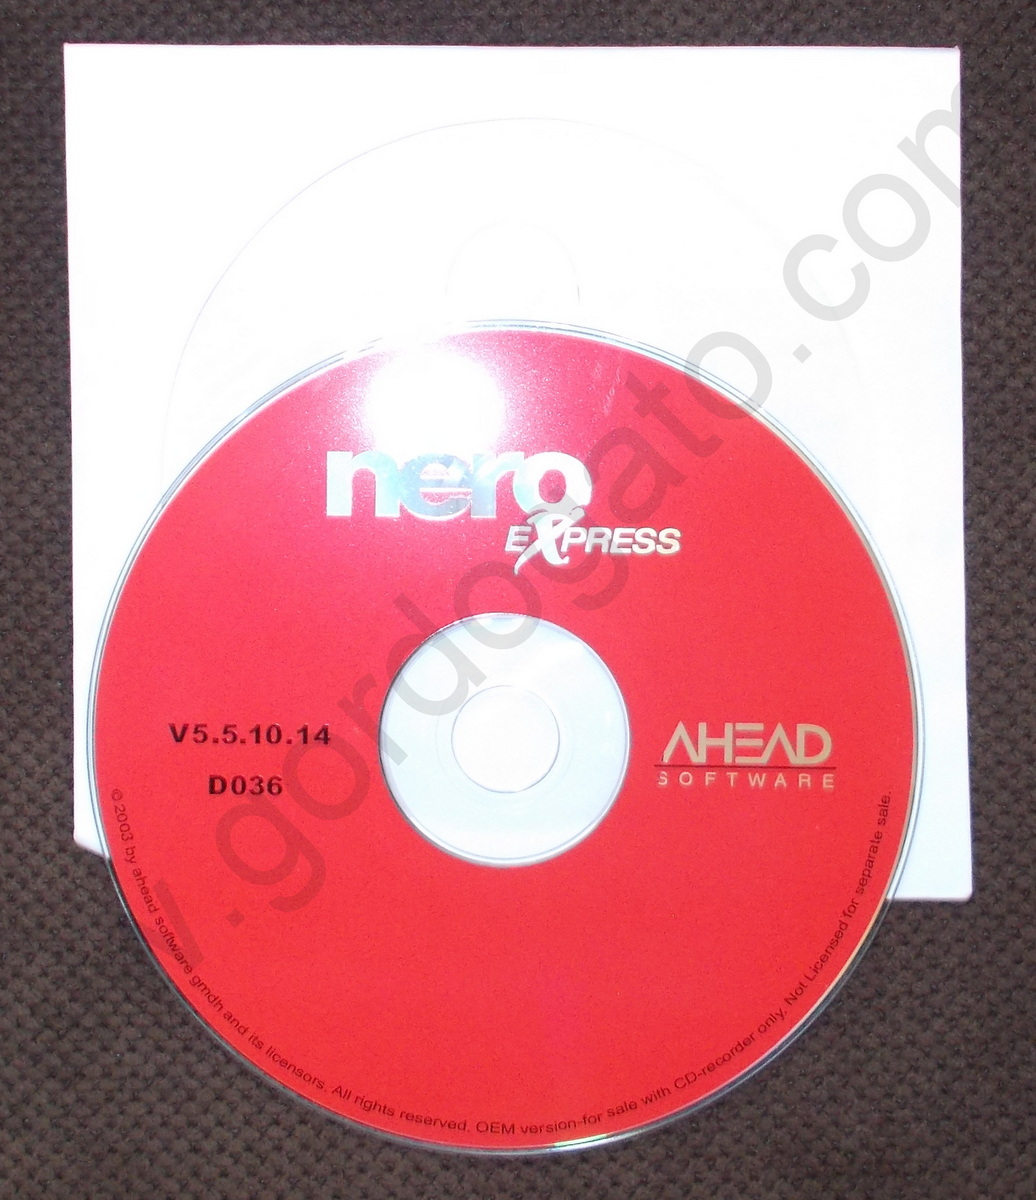 Nero Express 5.5.10.14 Old CD Burning Software 2003